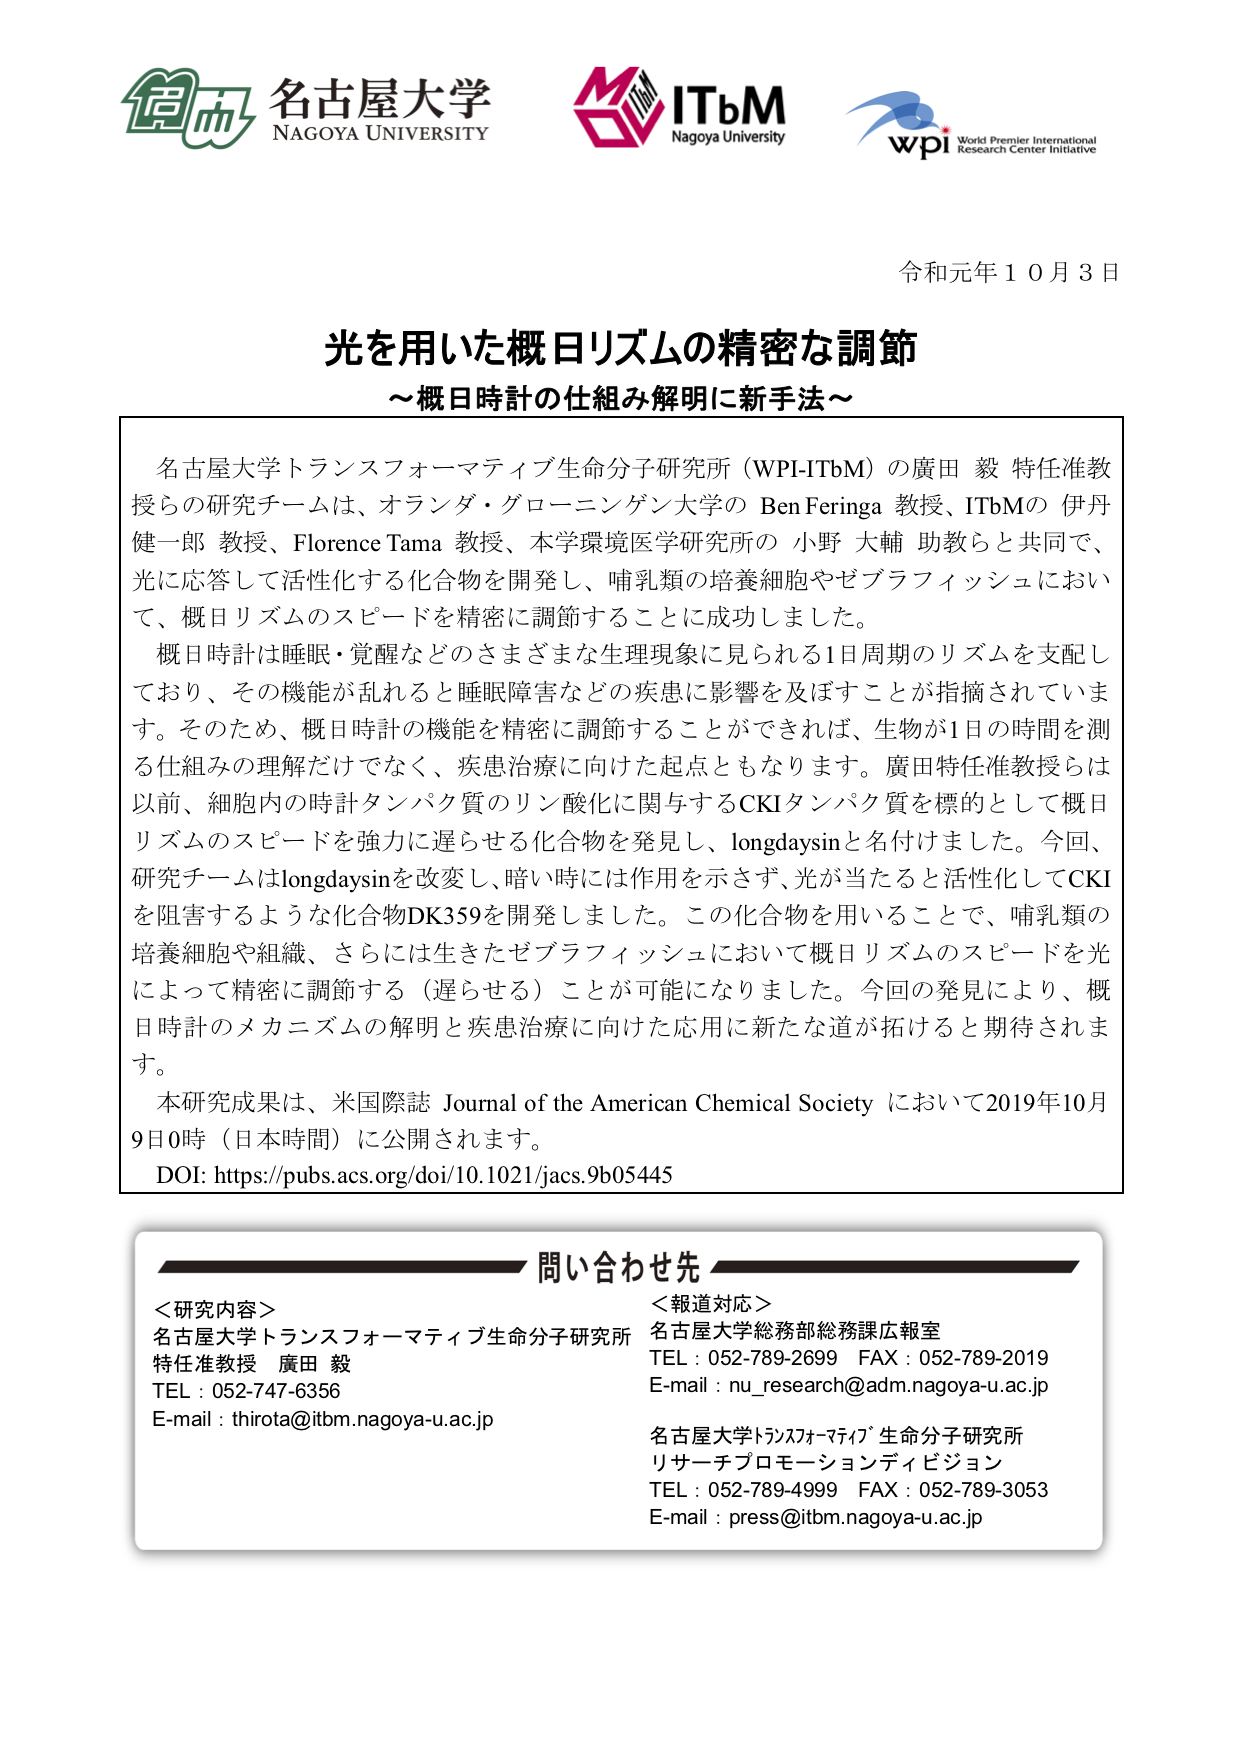 http://www.itbm.nagoya-u.ac.jp/ja_backup/research/ITbM-Hirota-20191002_final-modifyv2.png